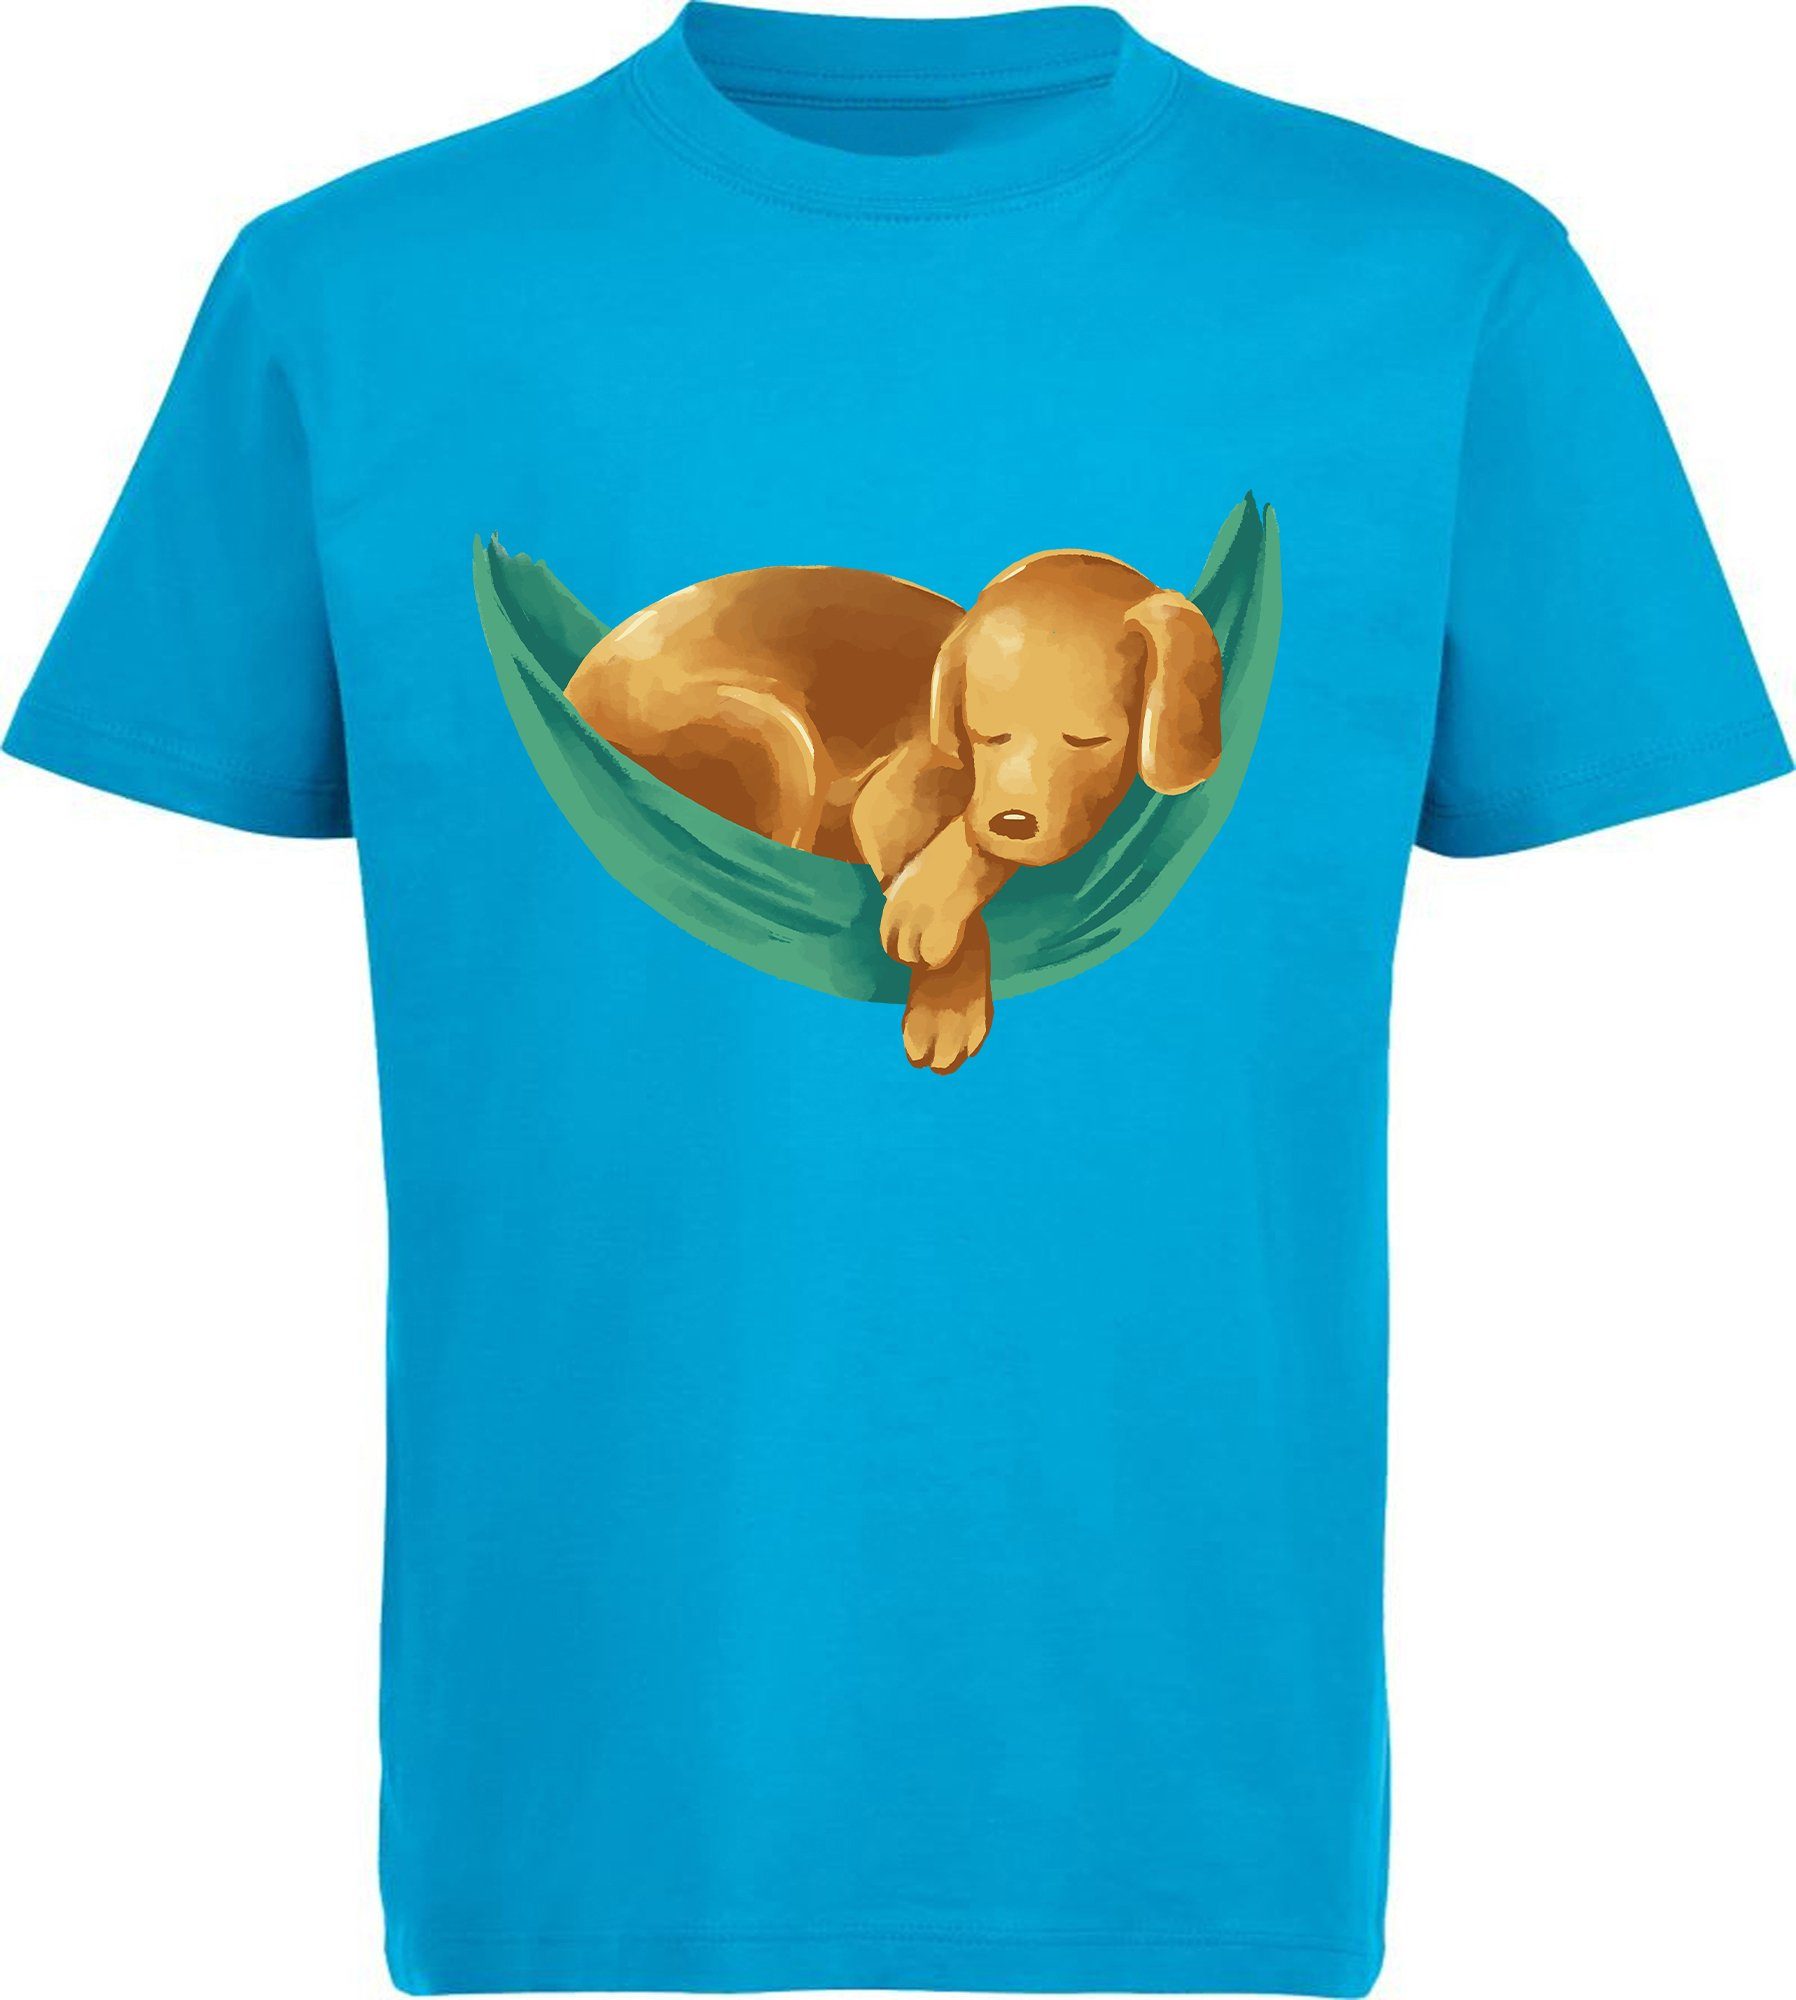 MyDesign24 T-Shirt Kinder Hunde Print Shirt bedruckt - Labrador Welpe in Hängematte Baumwollshirt mit Aufdruck, i245 aqua blau | T-Shirts